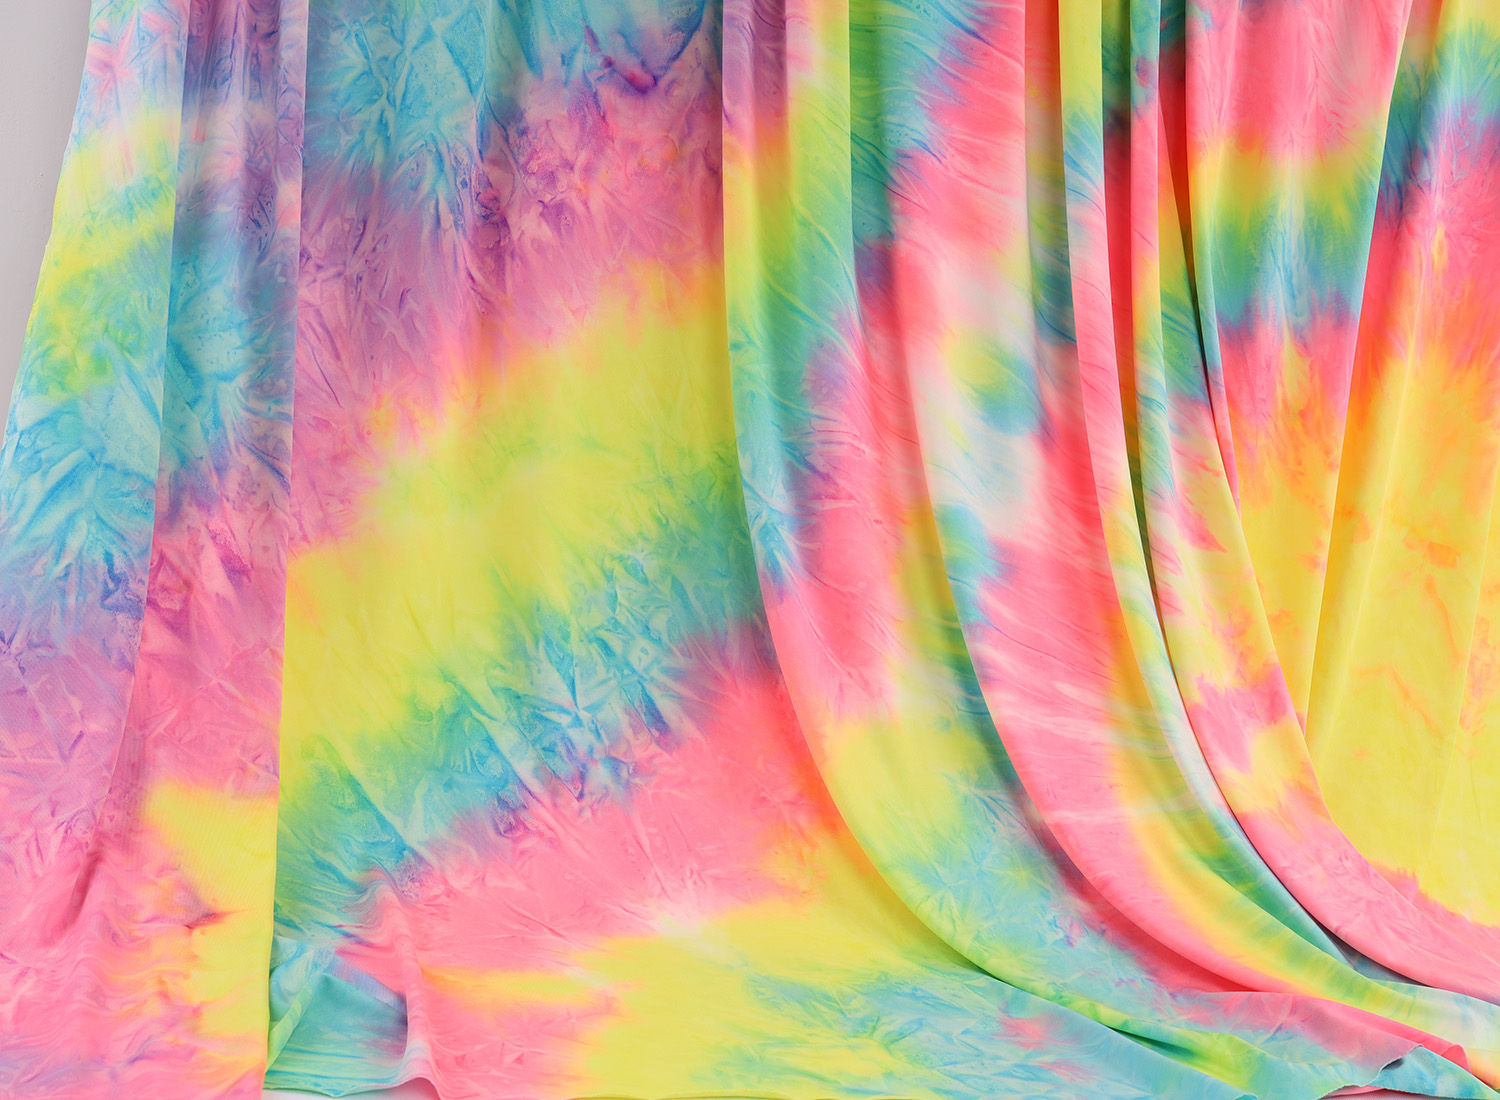 Rainbow Tie Dye Spandex Stretch Lycra Fabric Knit for Dancer Swimwear Sold By The Yard